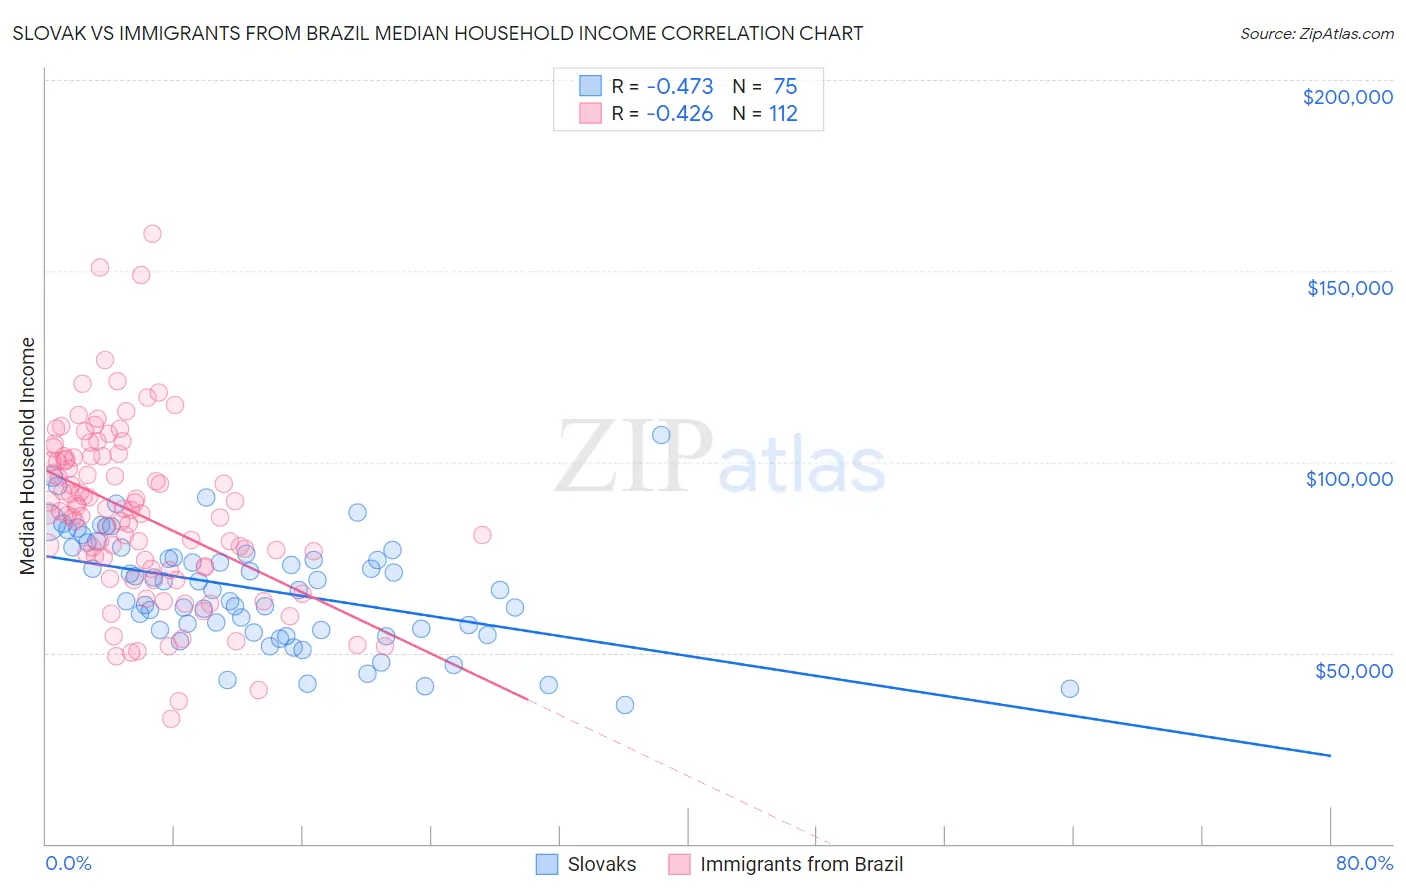 Slovak vs Immigrants from Brazil Median Household Income